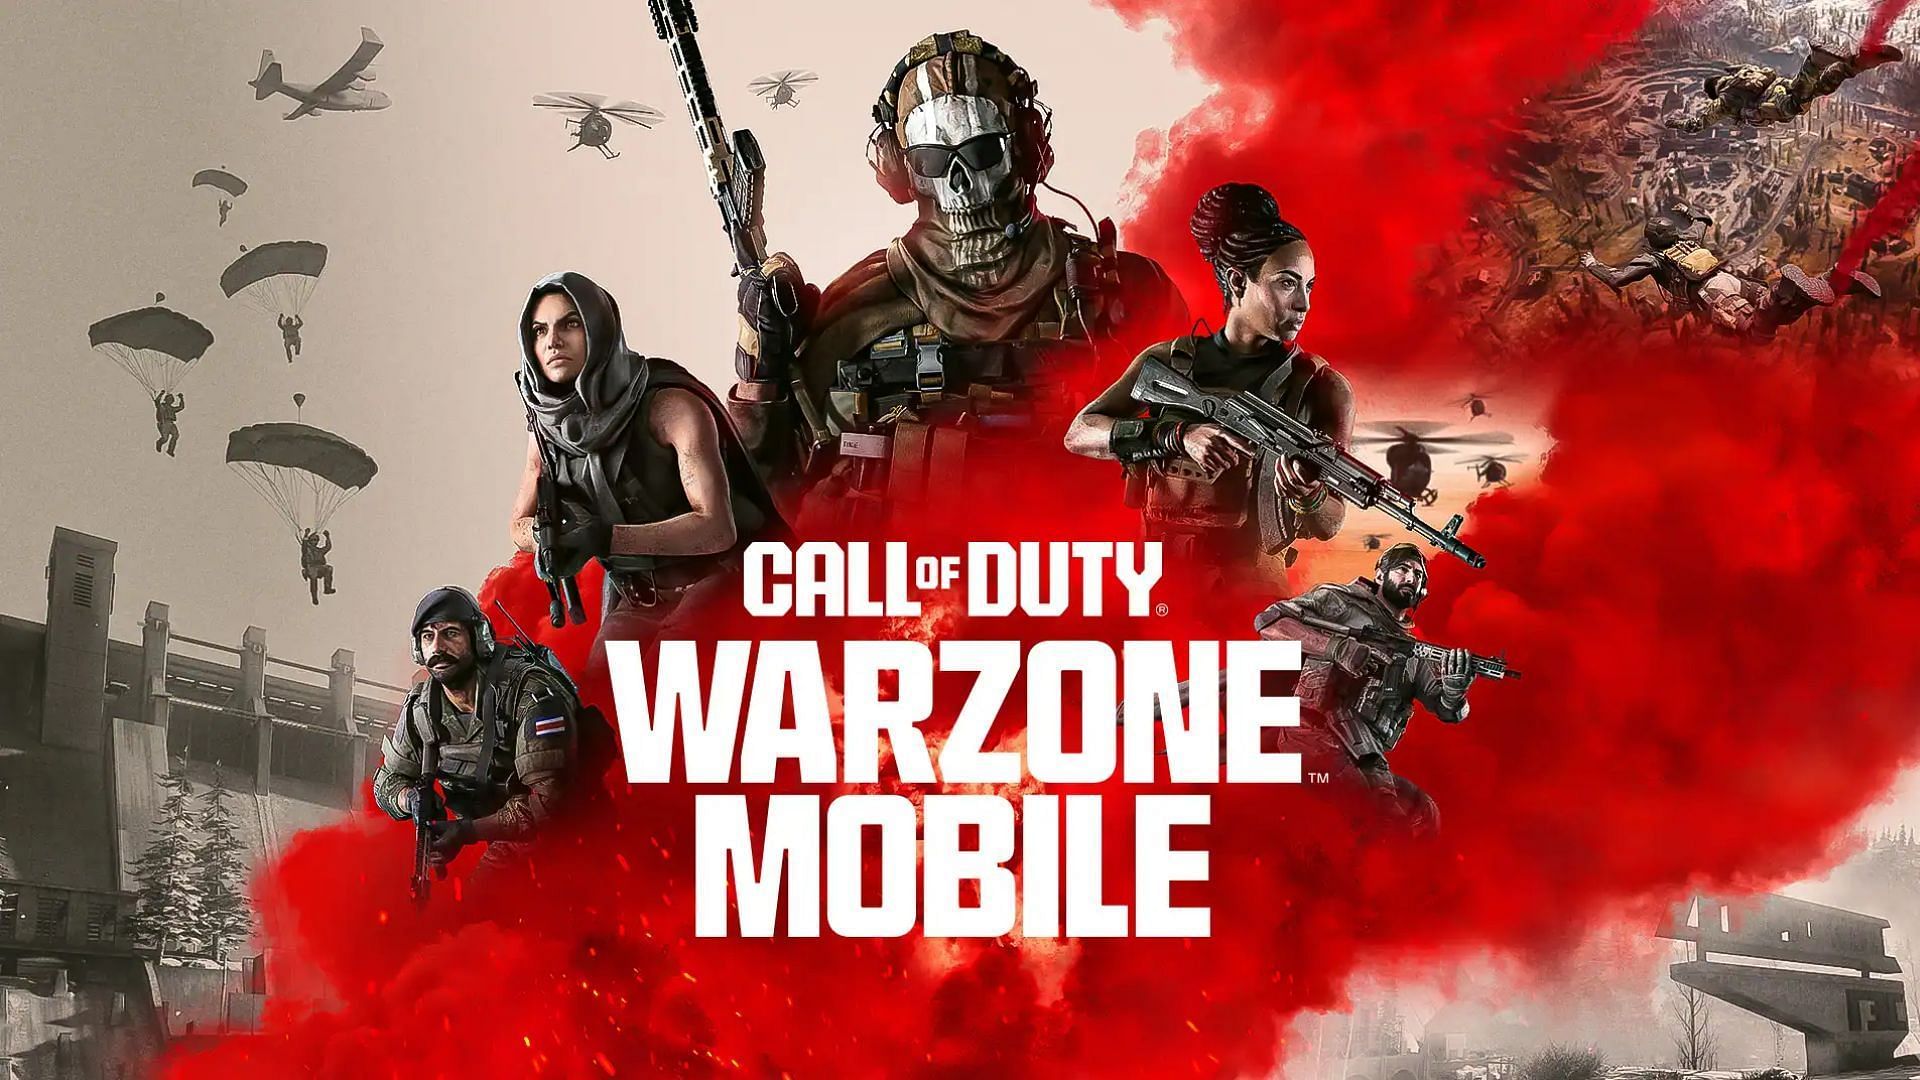 Warzone Mobile settings